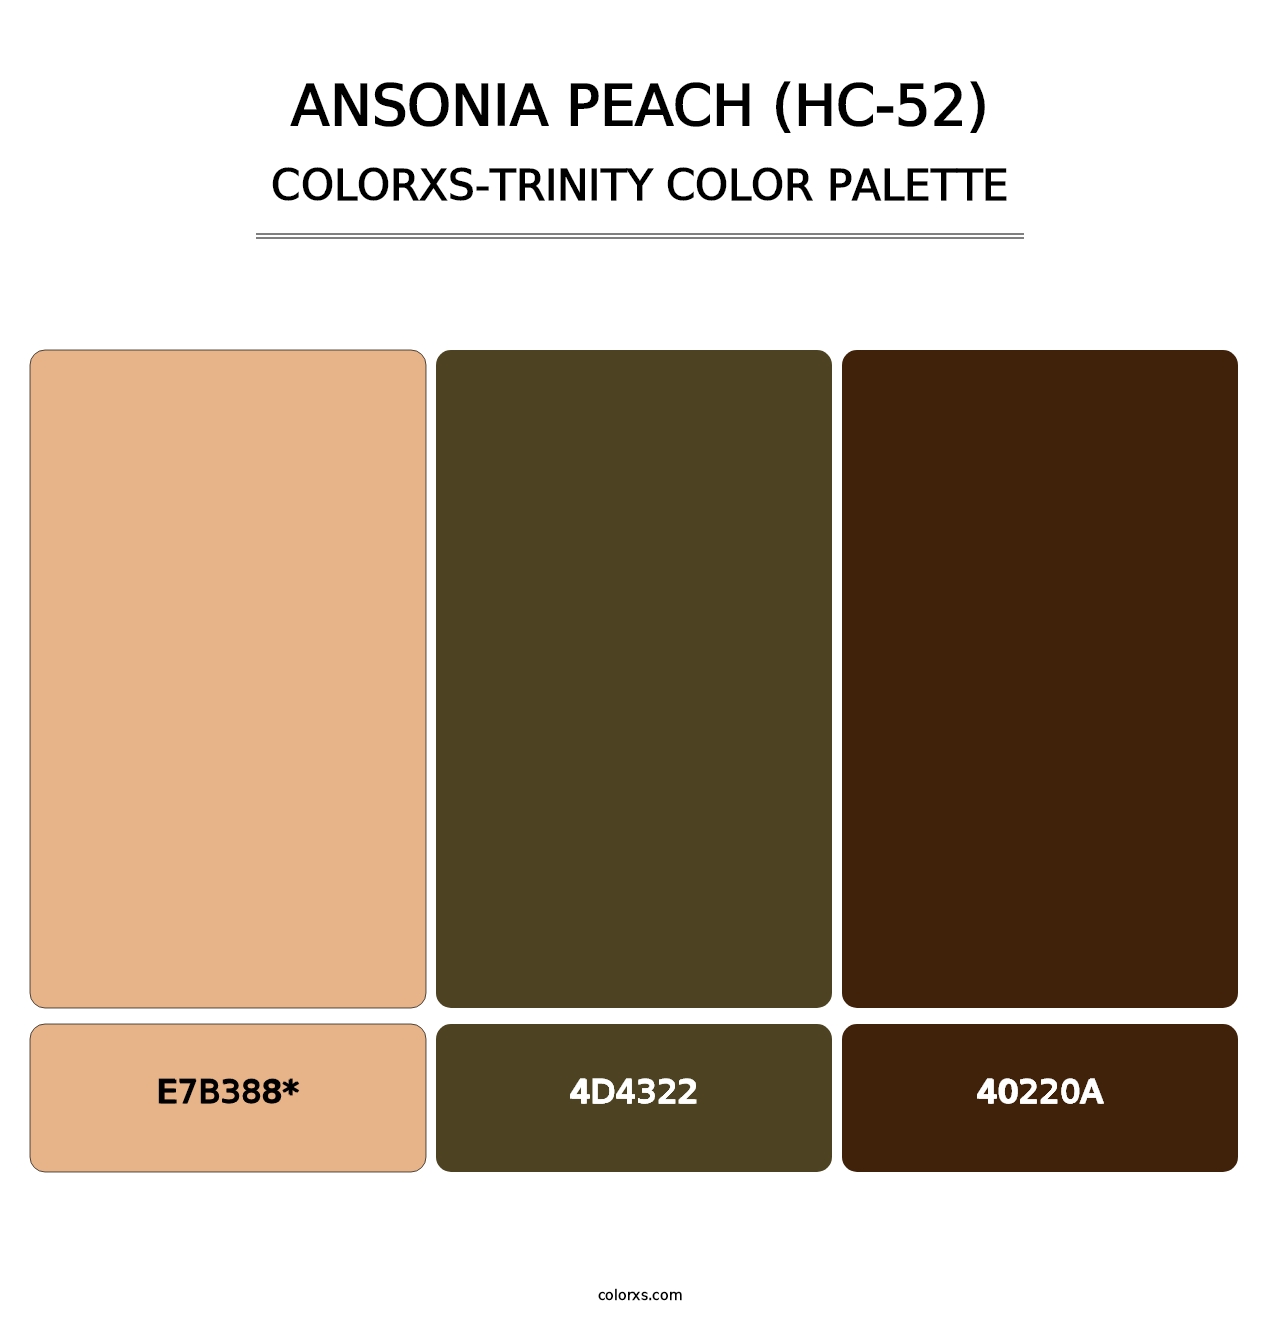 Ansonia Peach (HC-52) - Colorxs Trinity Palette